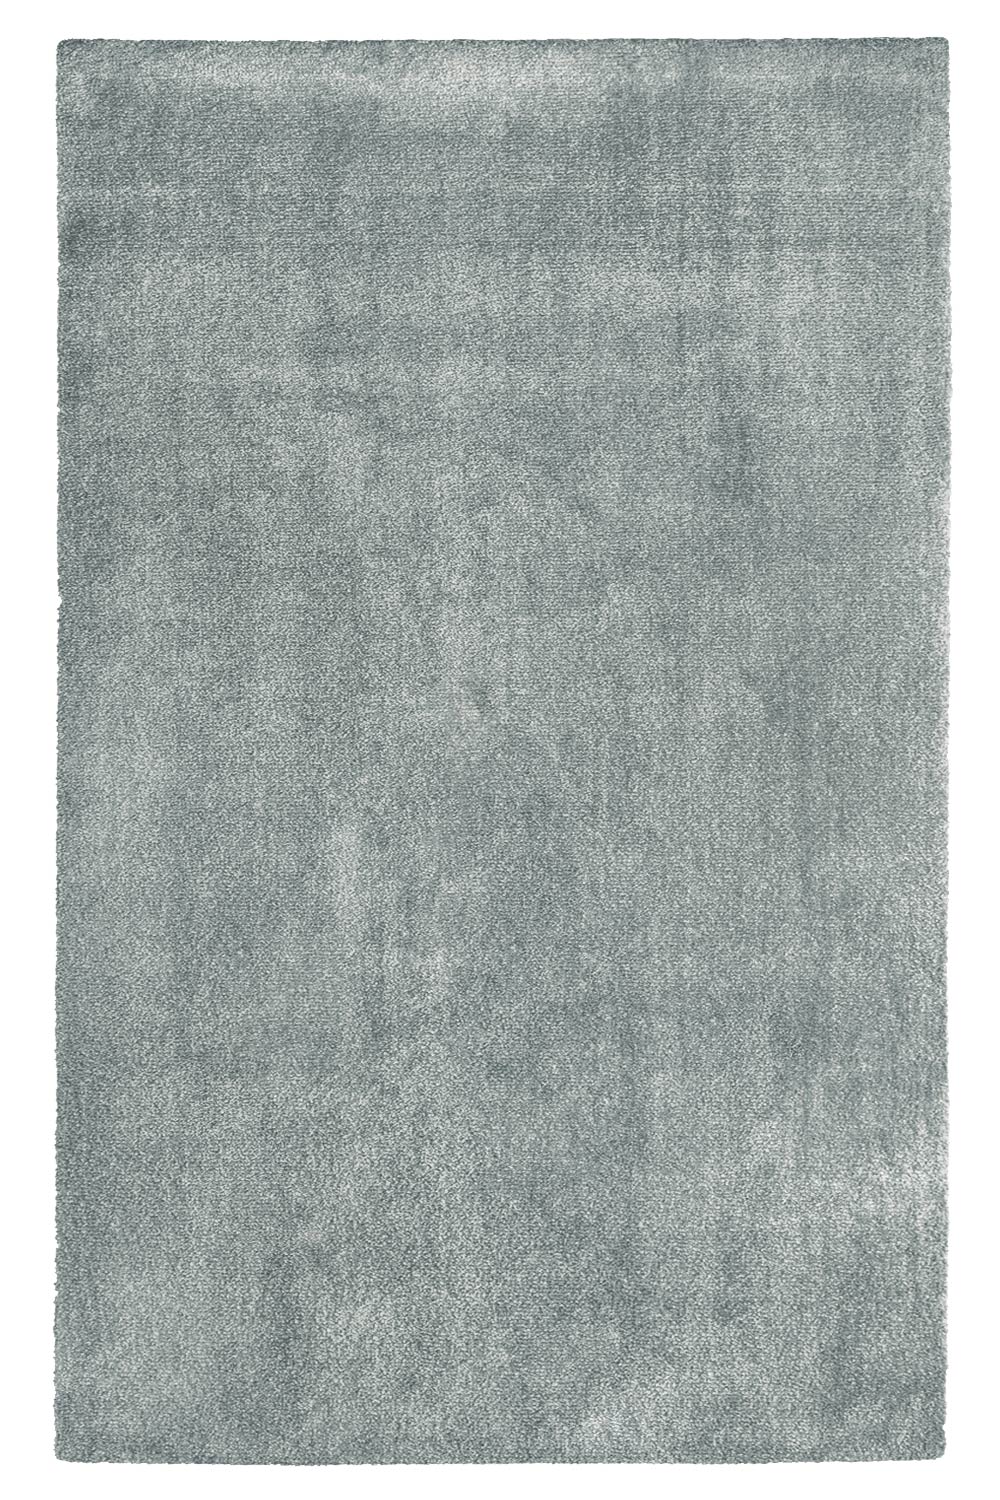 Kusový koberec Labrador 71351 070 Middle Grey 140x200 cm